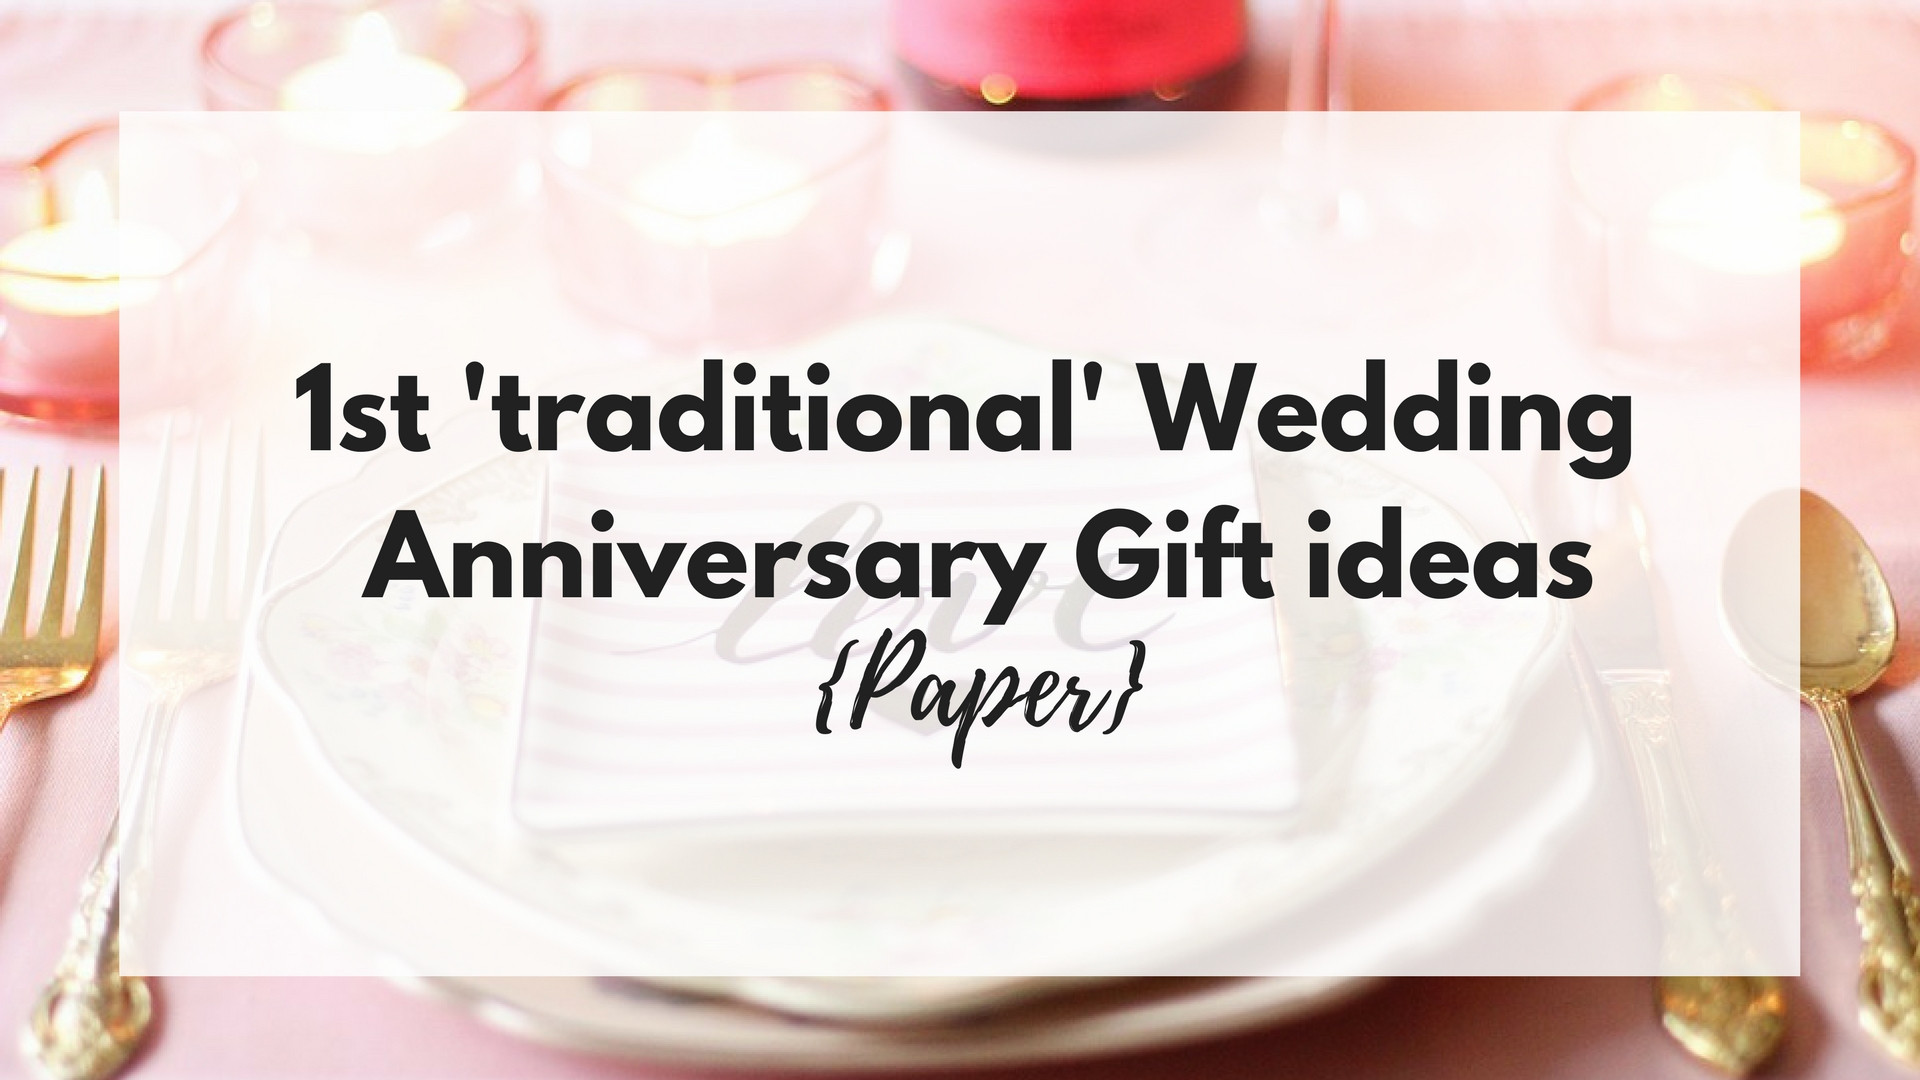 1St Year Wedding Anniversary Gift Ideas
 1st ‘traditional’ Wedding Anniversary Gift ideas Paper